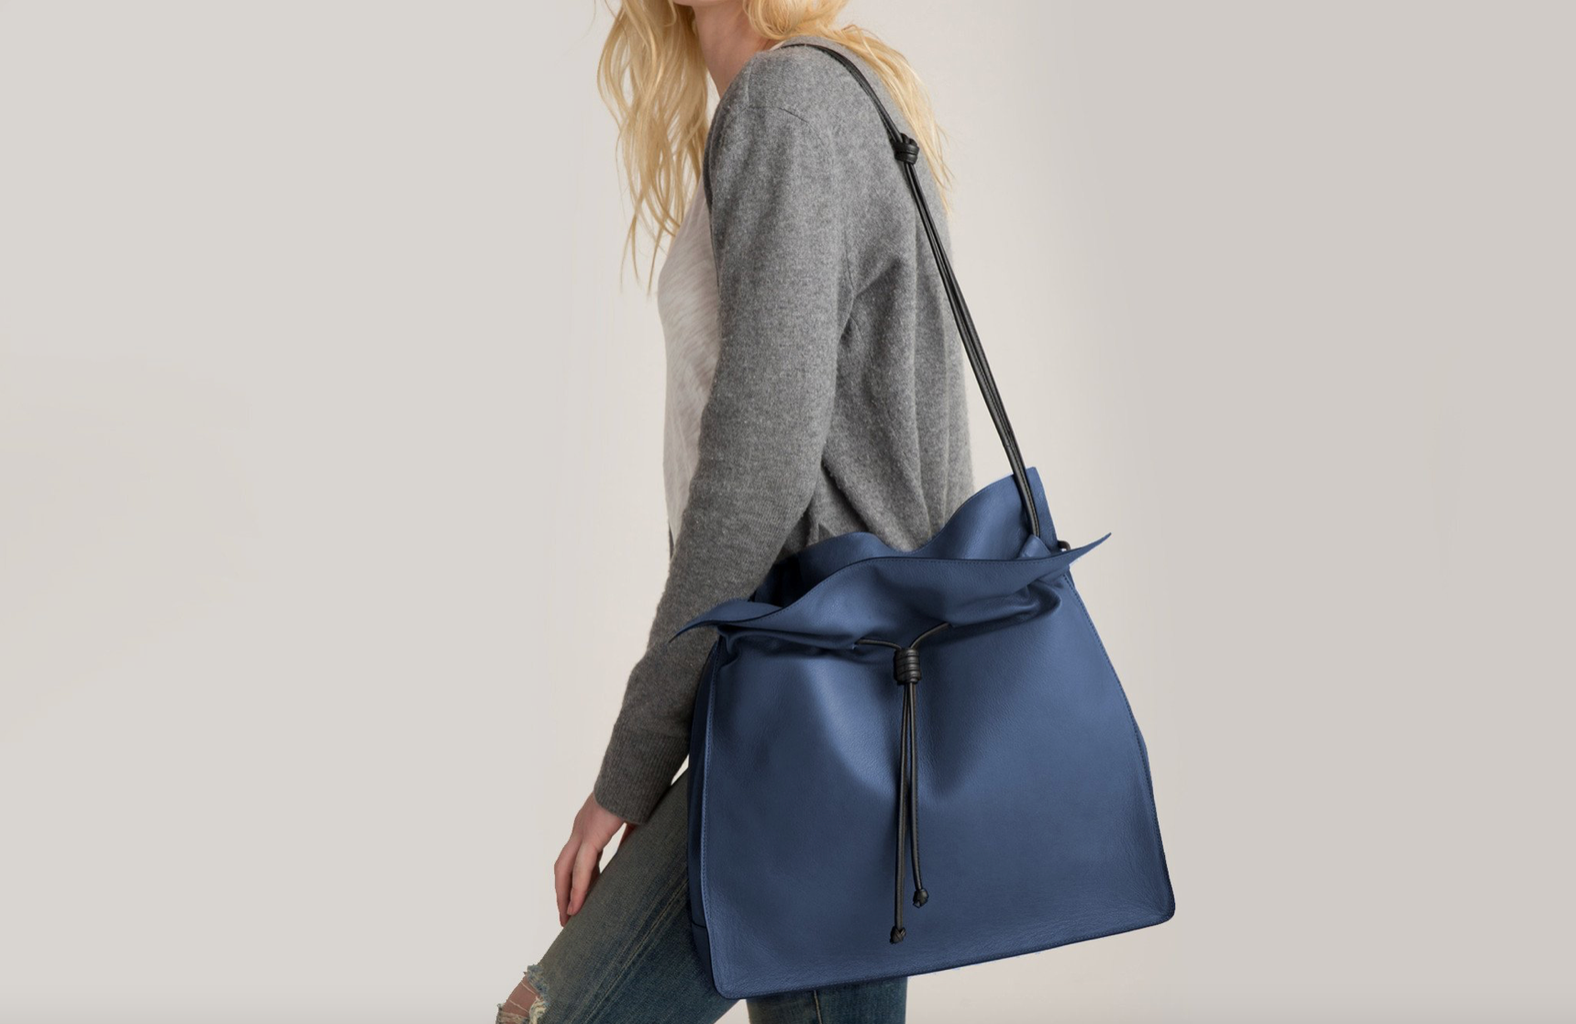 Von Holzhausen the large shopper, woman holding large blue bag over one shoulder